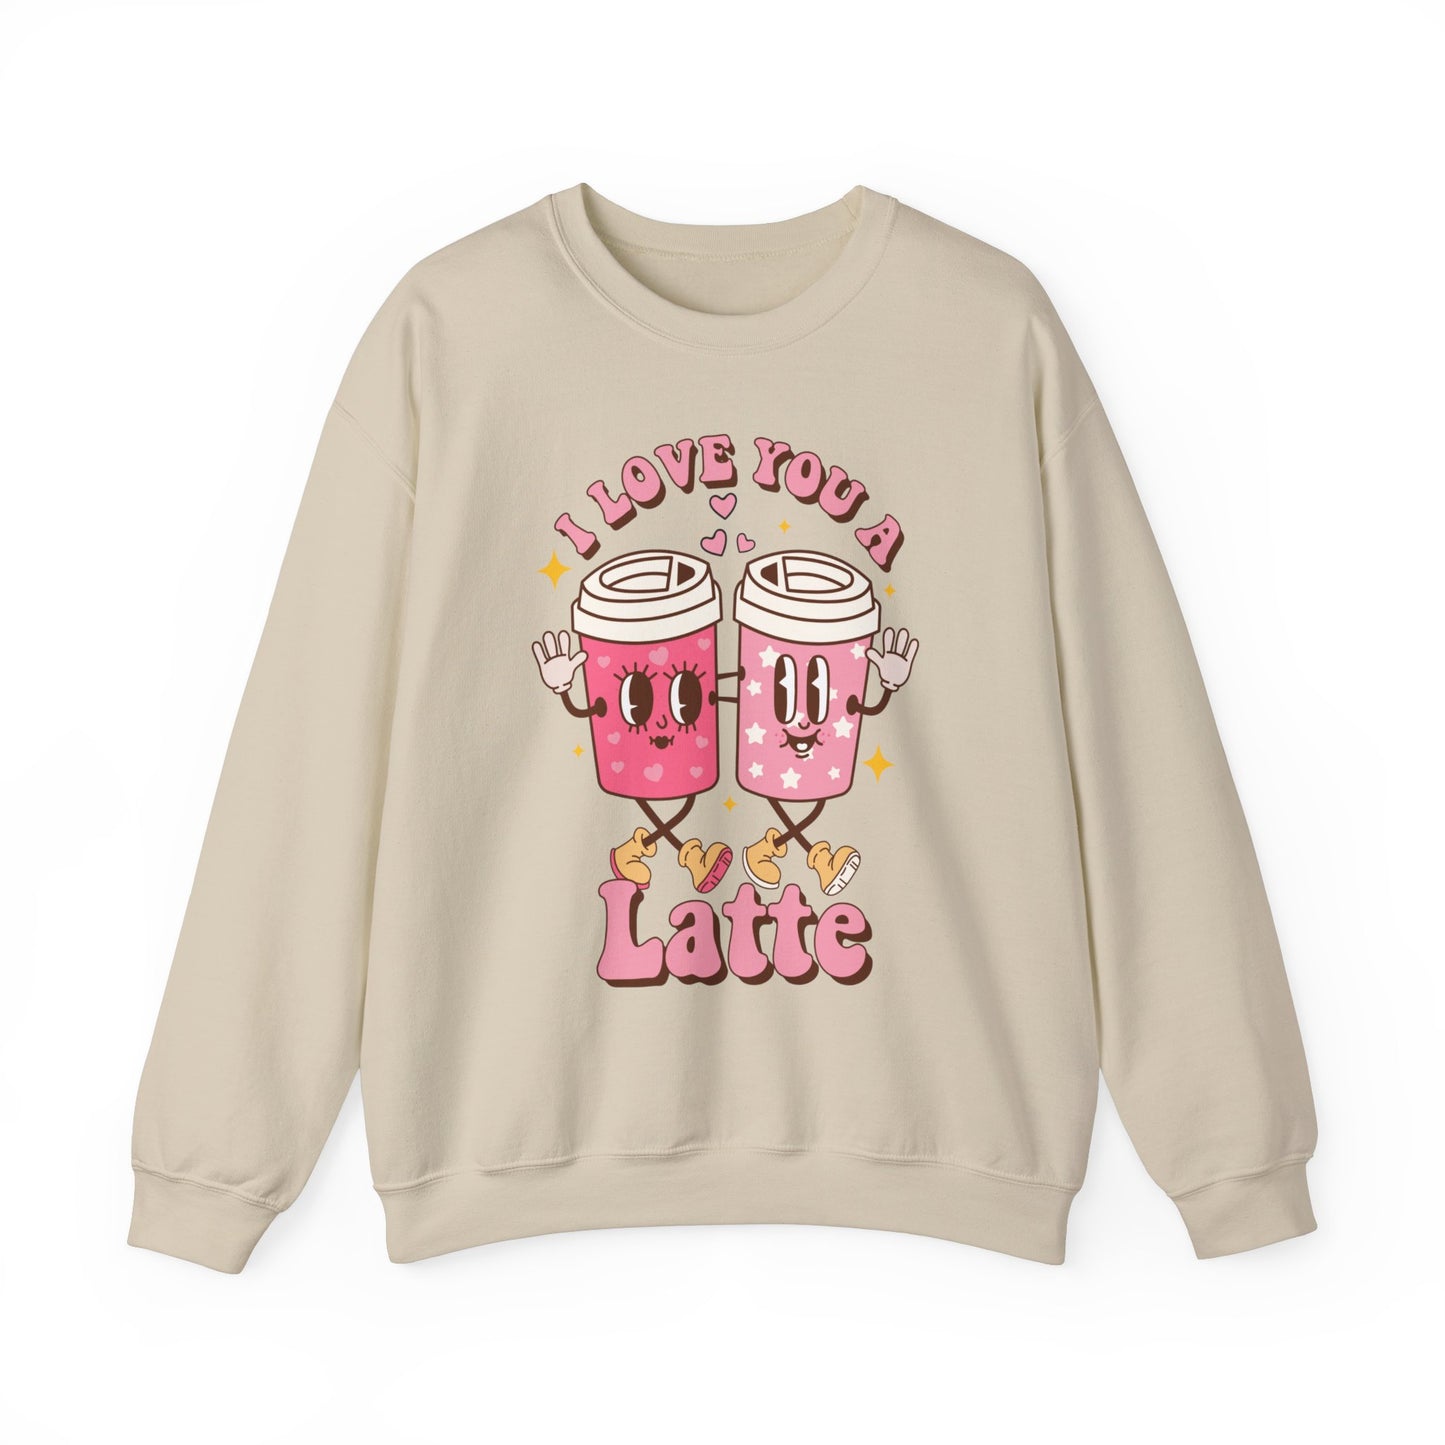 I Love You a Latte - Sweatshirt